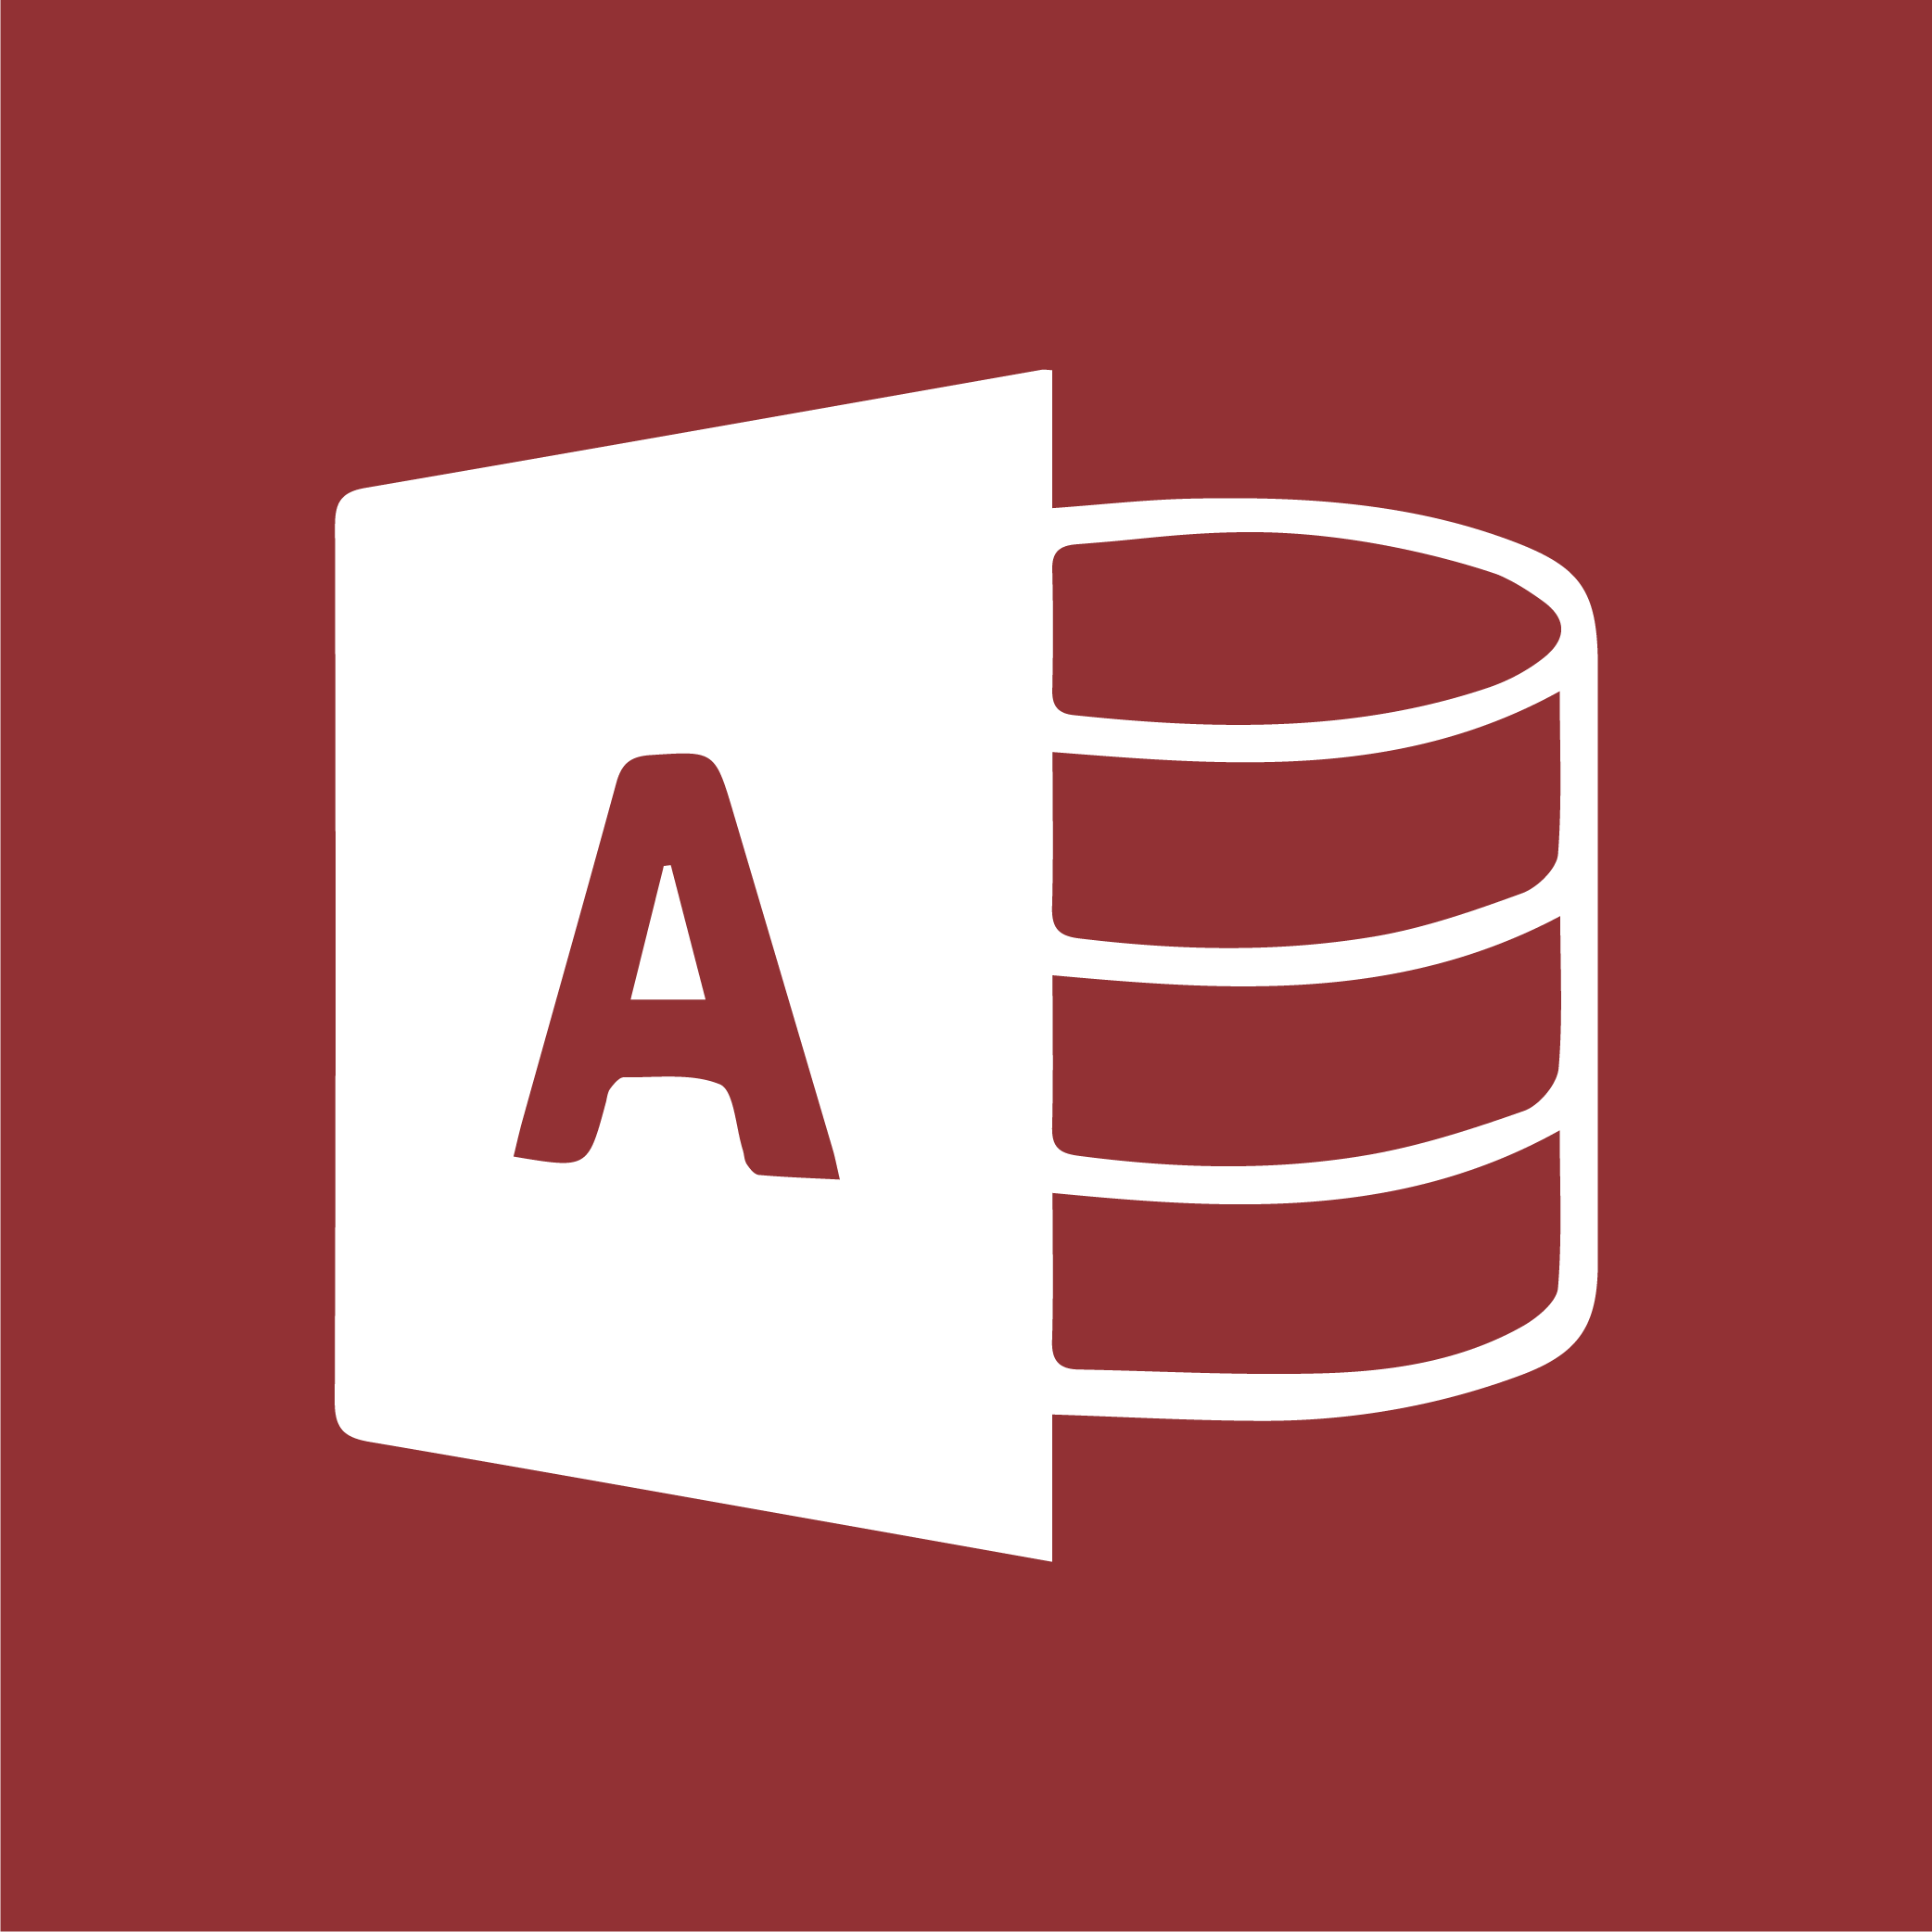 Access сайт. Иконка MS access. MS access ярлык. Базы данных access логотип. Microsoft access картинки.